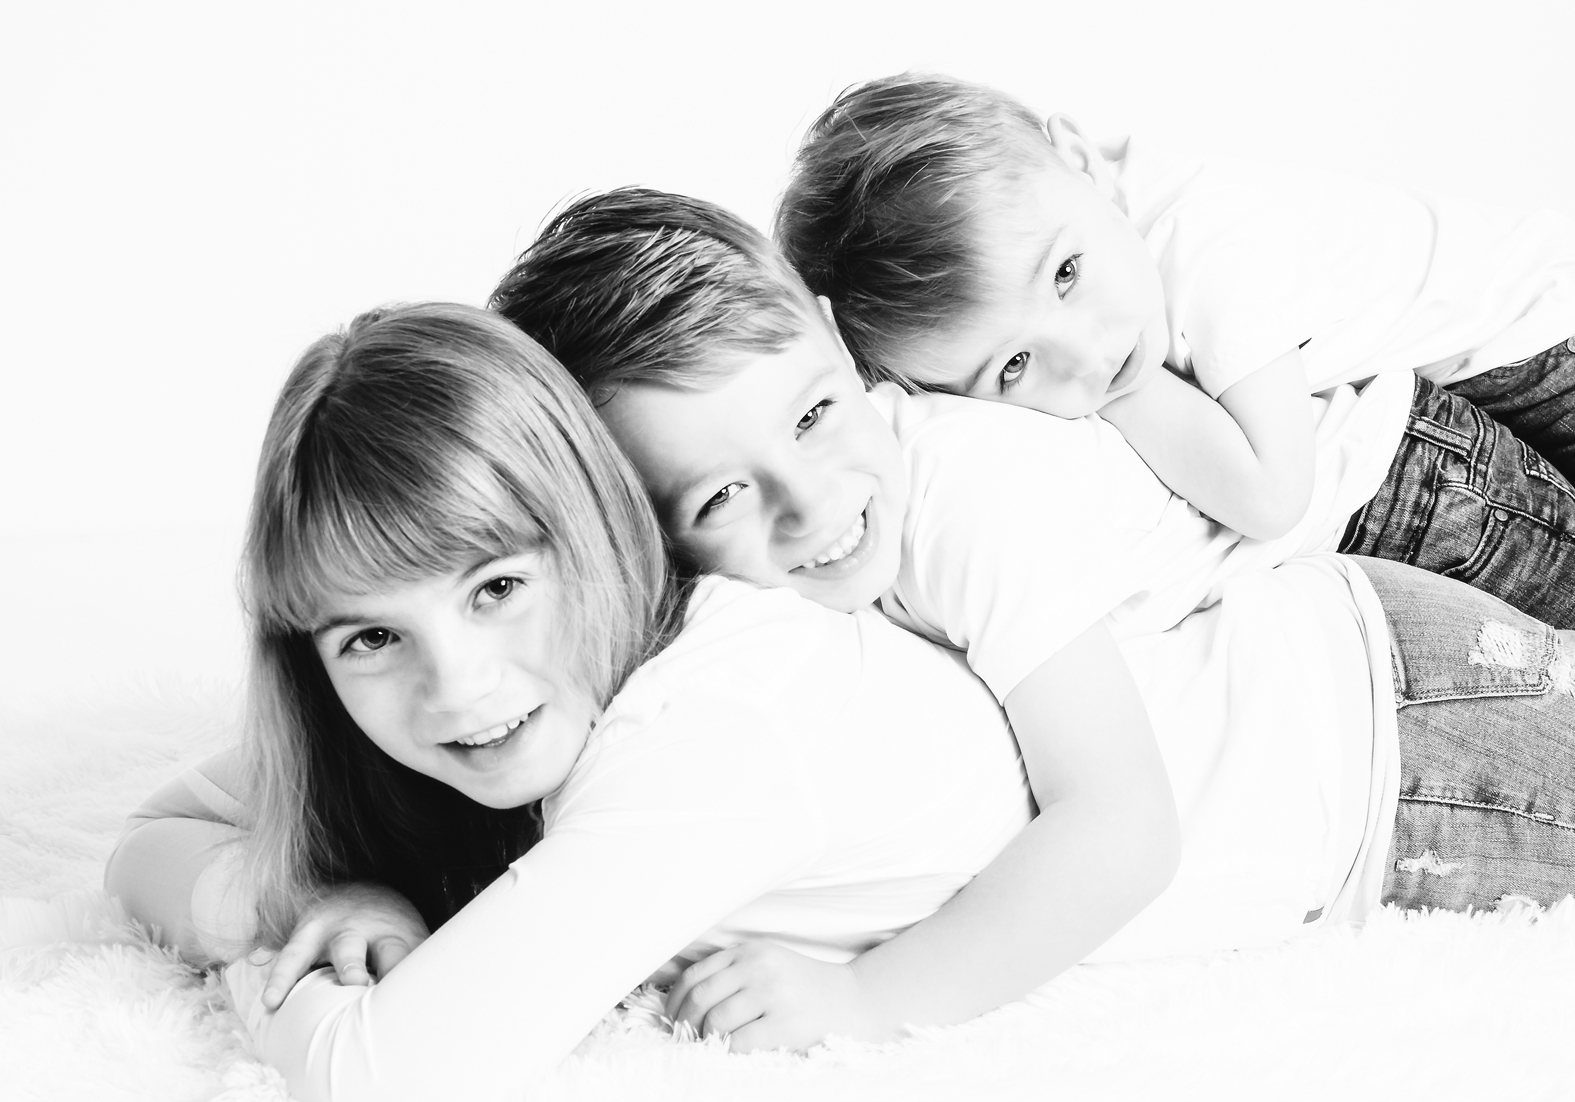 Familienbilder, Familienfotografie, Kinderfotografie, Outdoorfotografie, Kirsten Hedemann Fotografie, Baby und Familienfotografie Nordenham